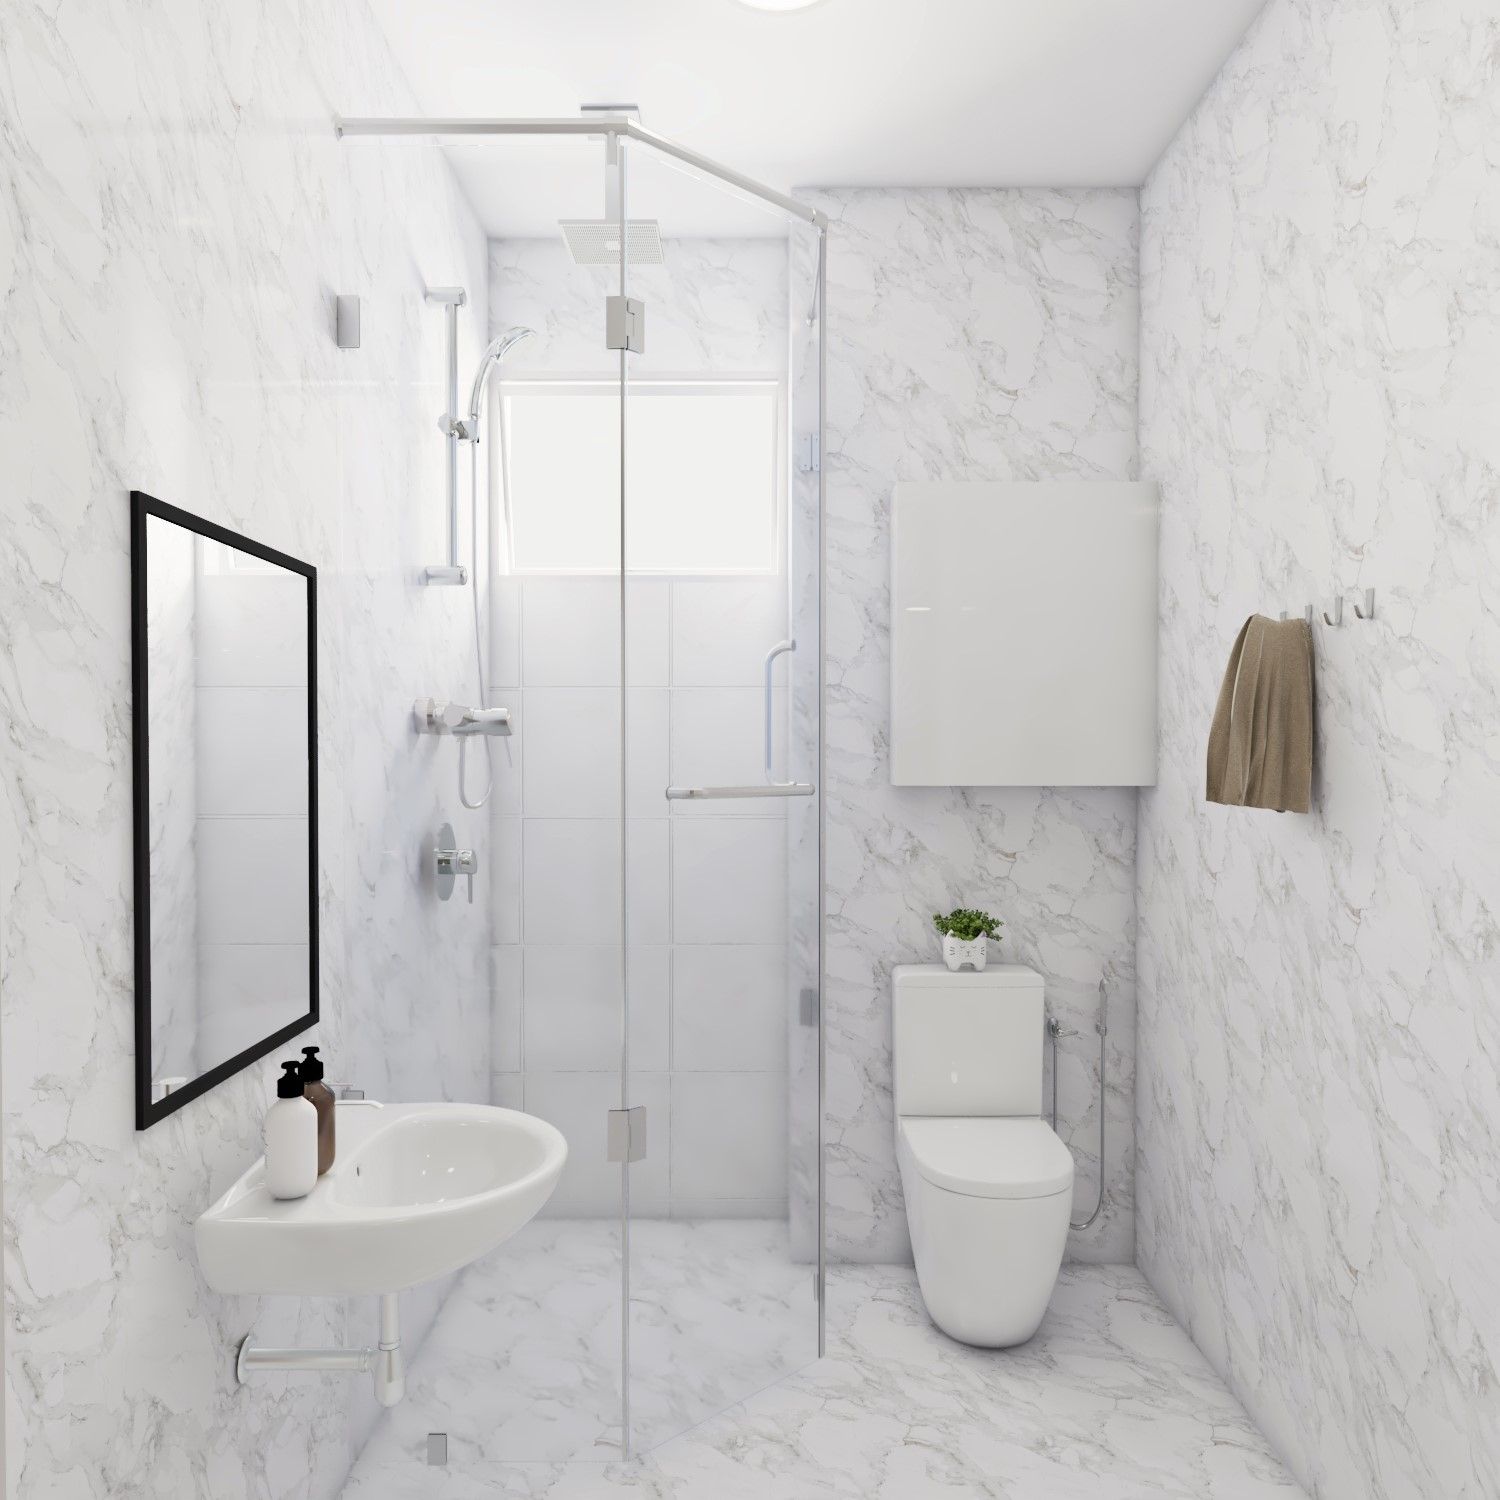 Contemporary Monochromatic White-Themed Bathroom Design